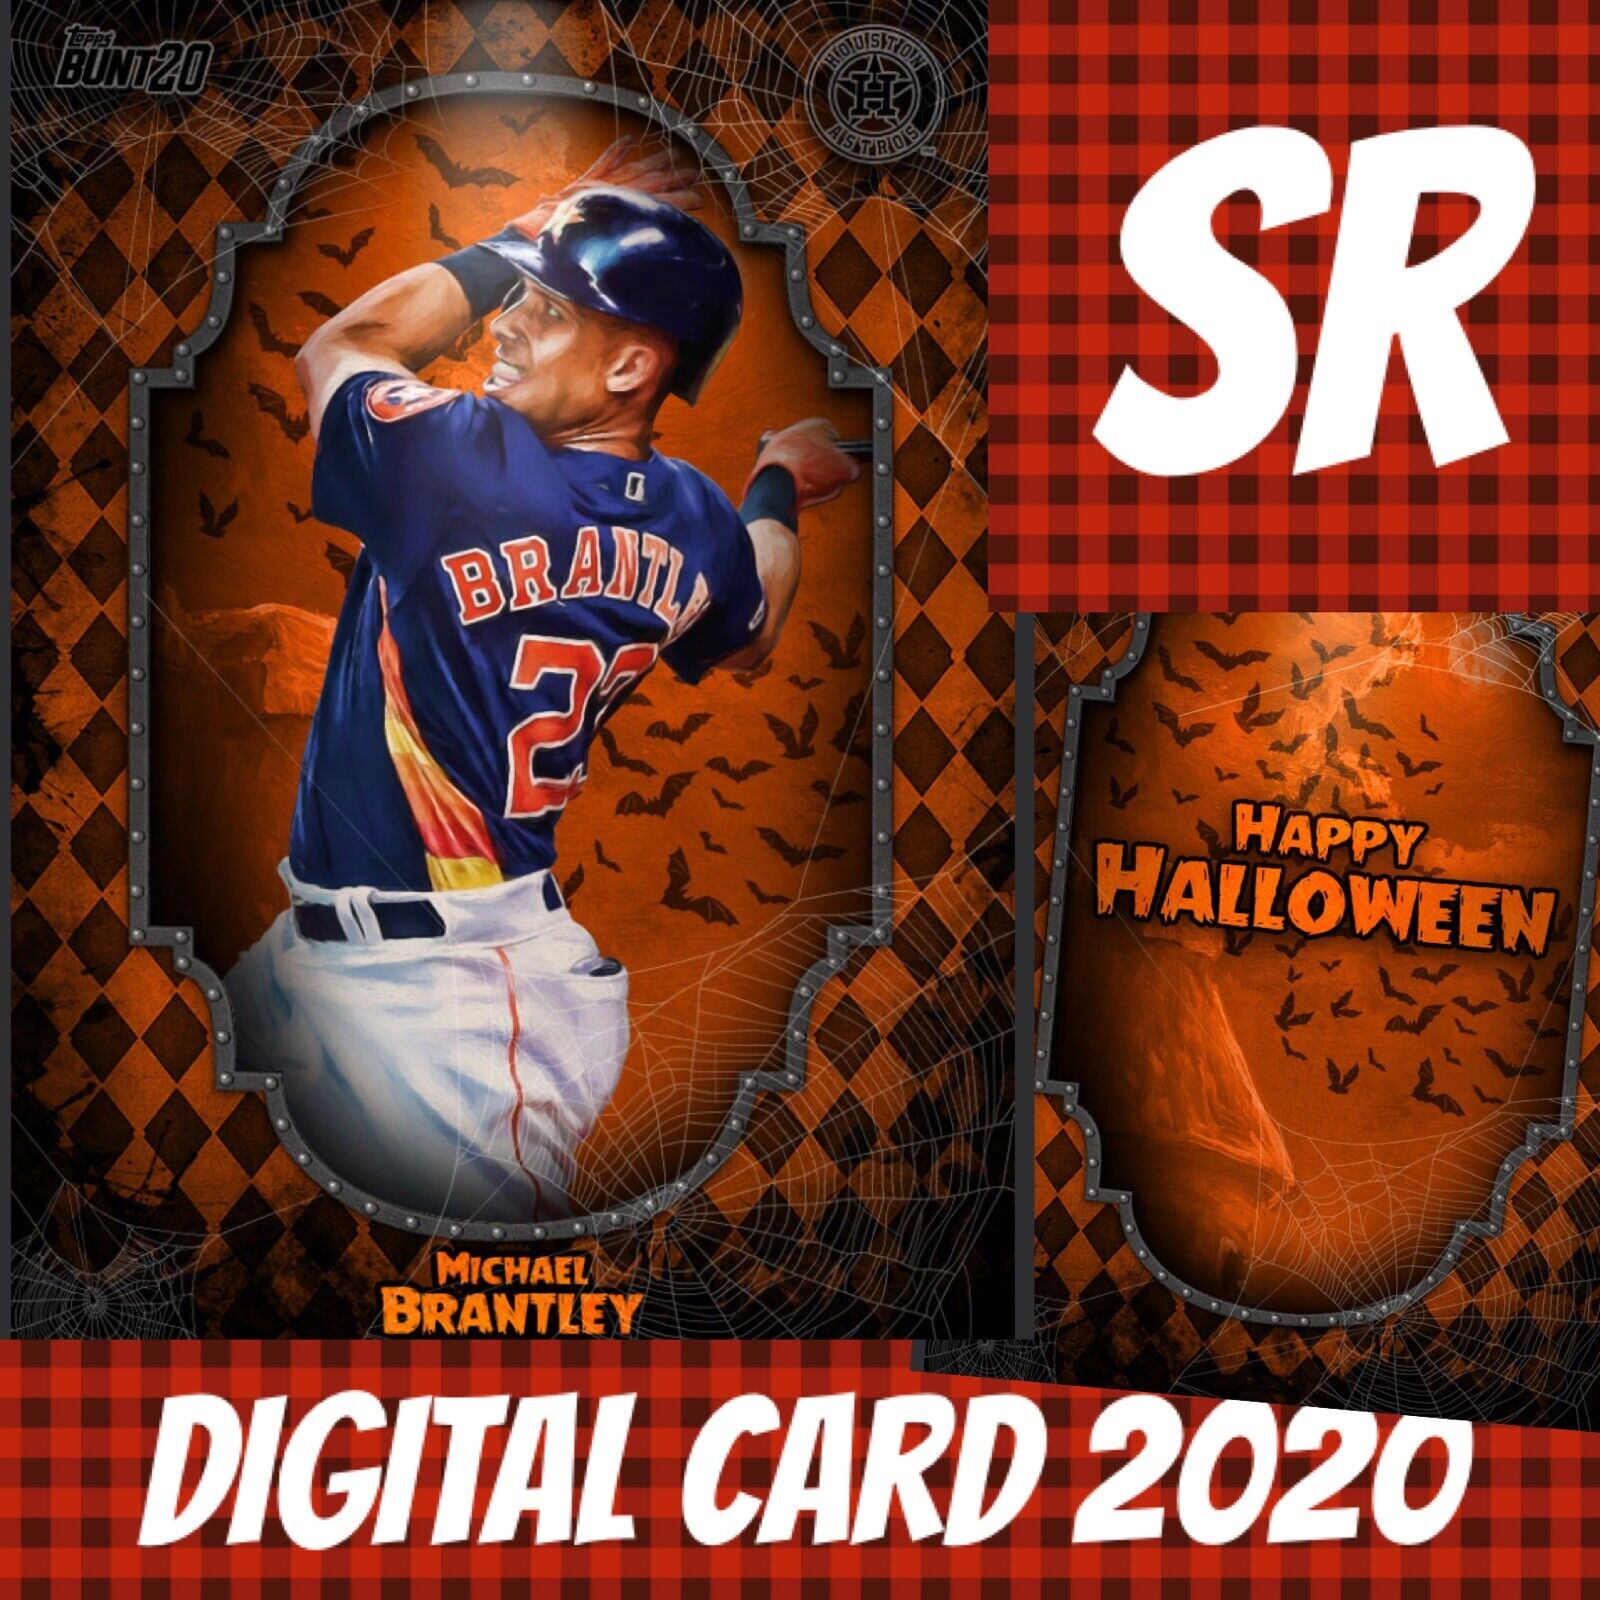 2020 Topps Colorful 20 Michael Brantley Halloween Orange Base Digital Card